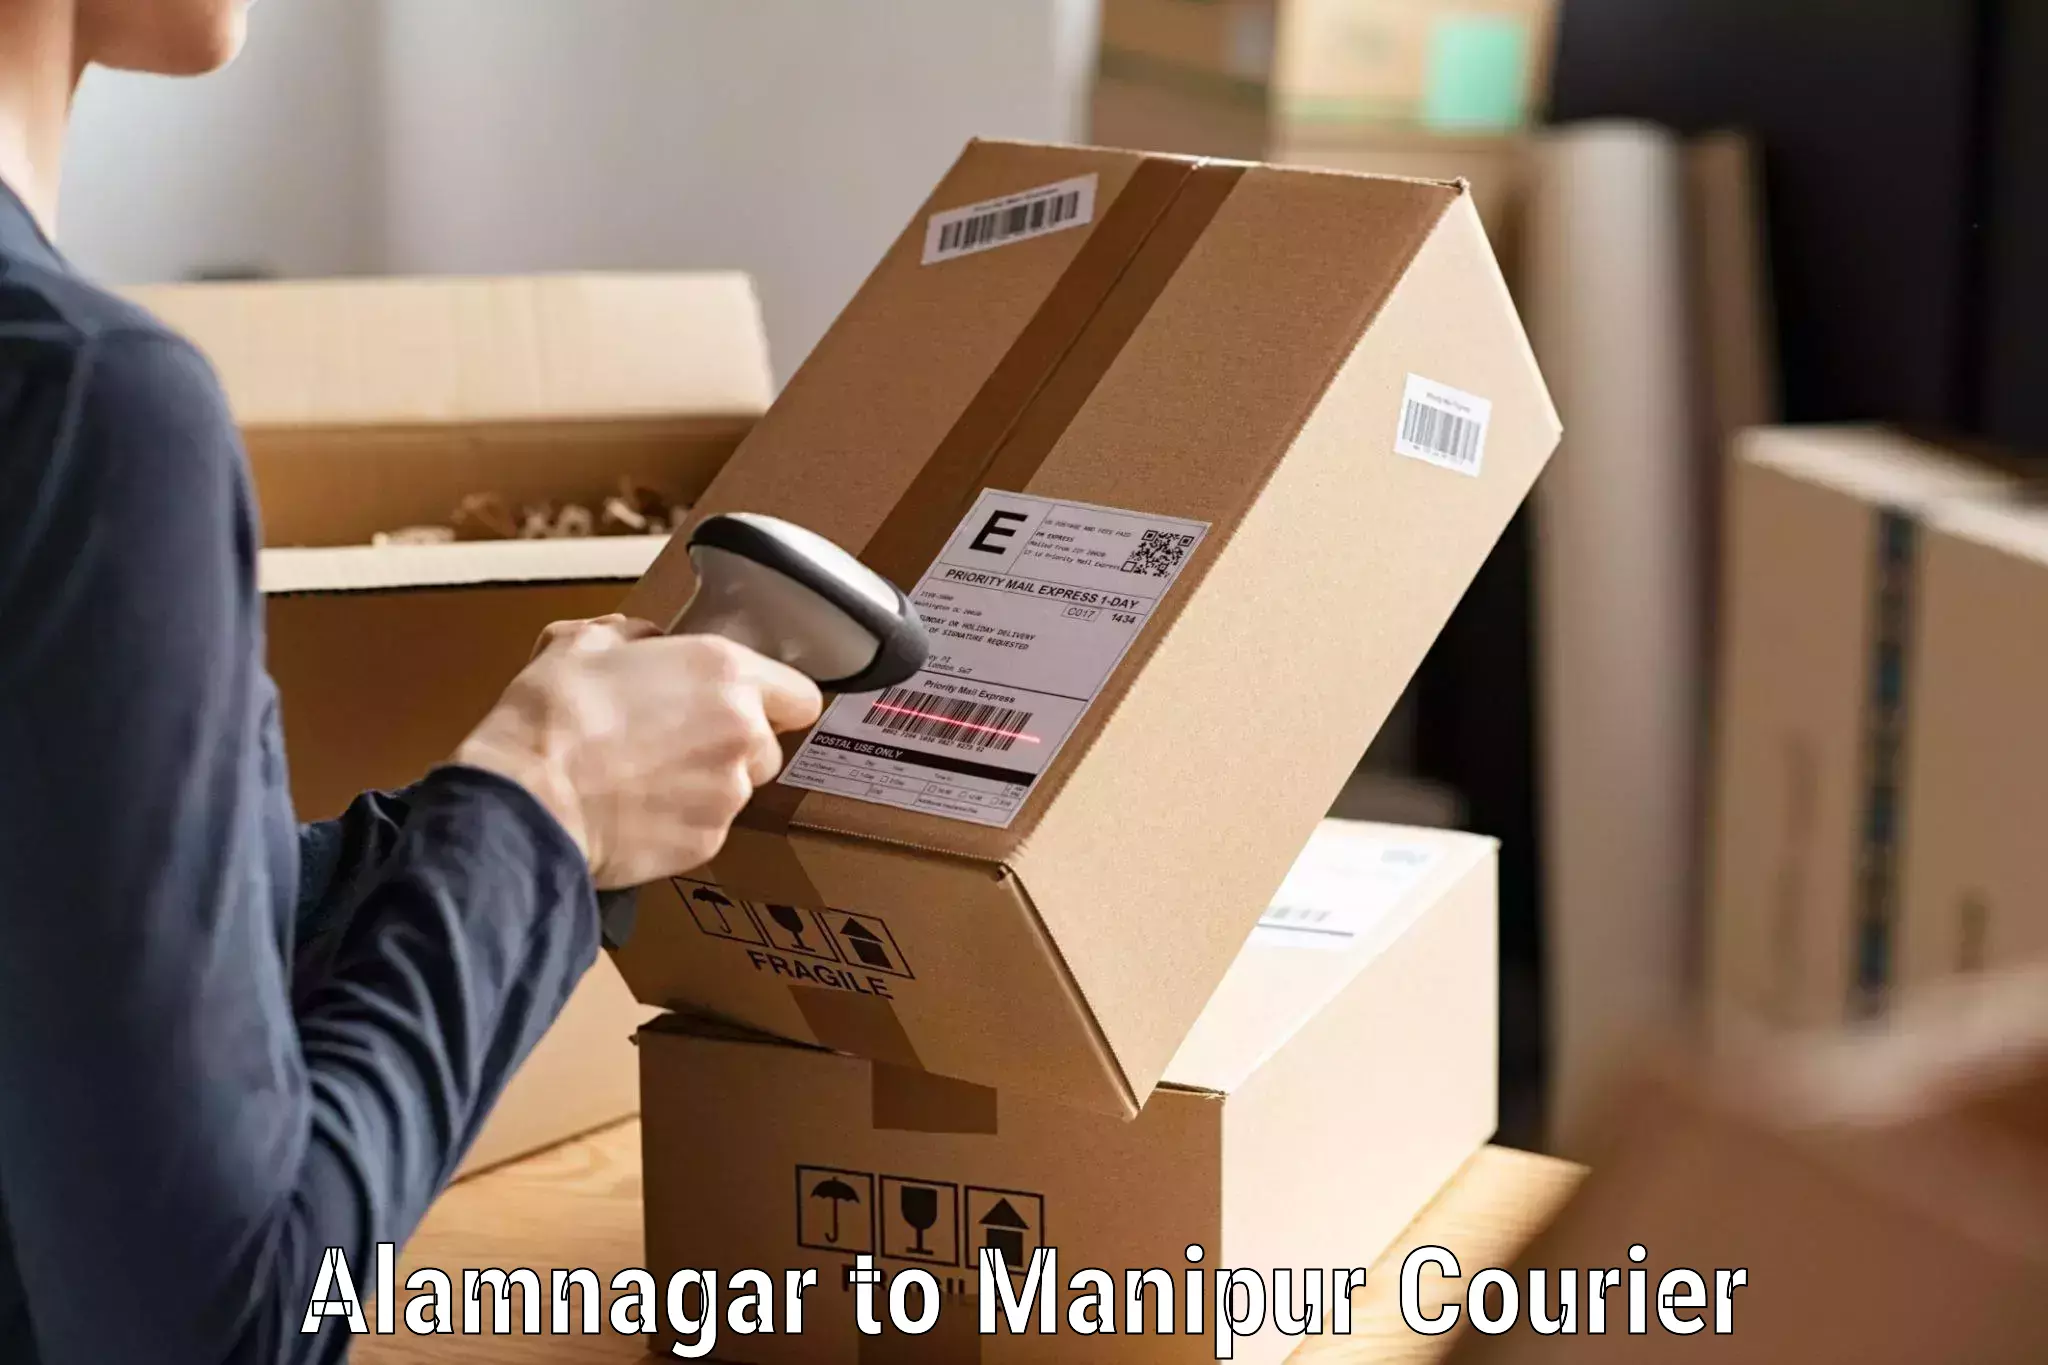 Cash on delivery service Alamnagar to Chandel